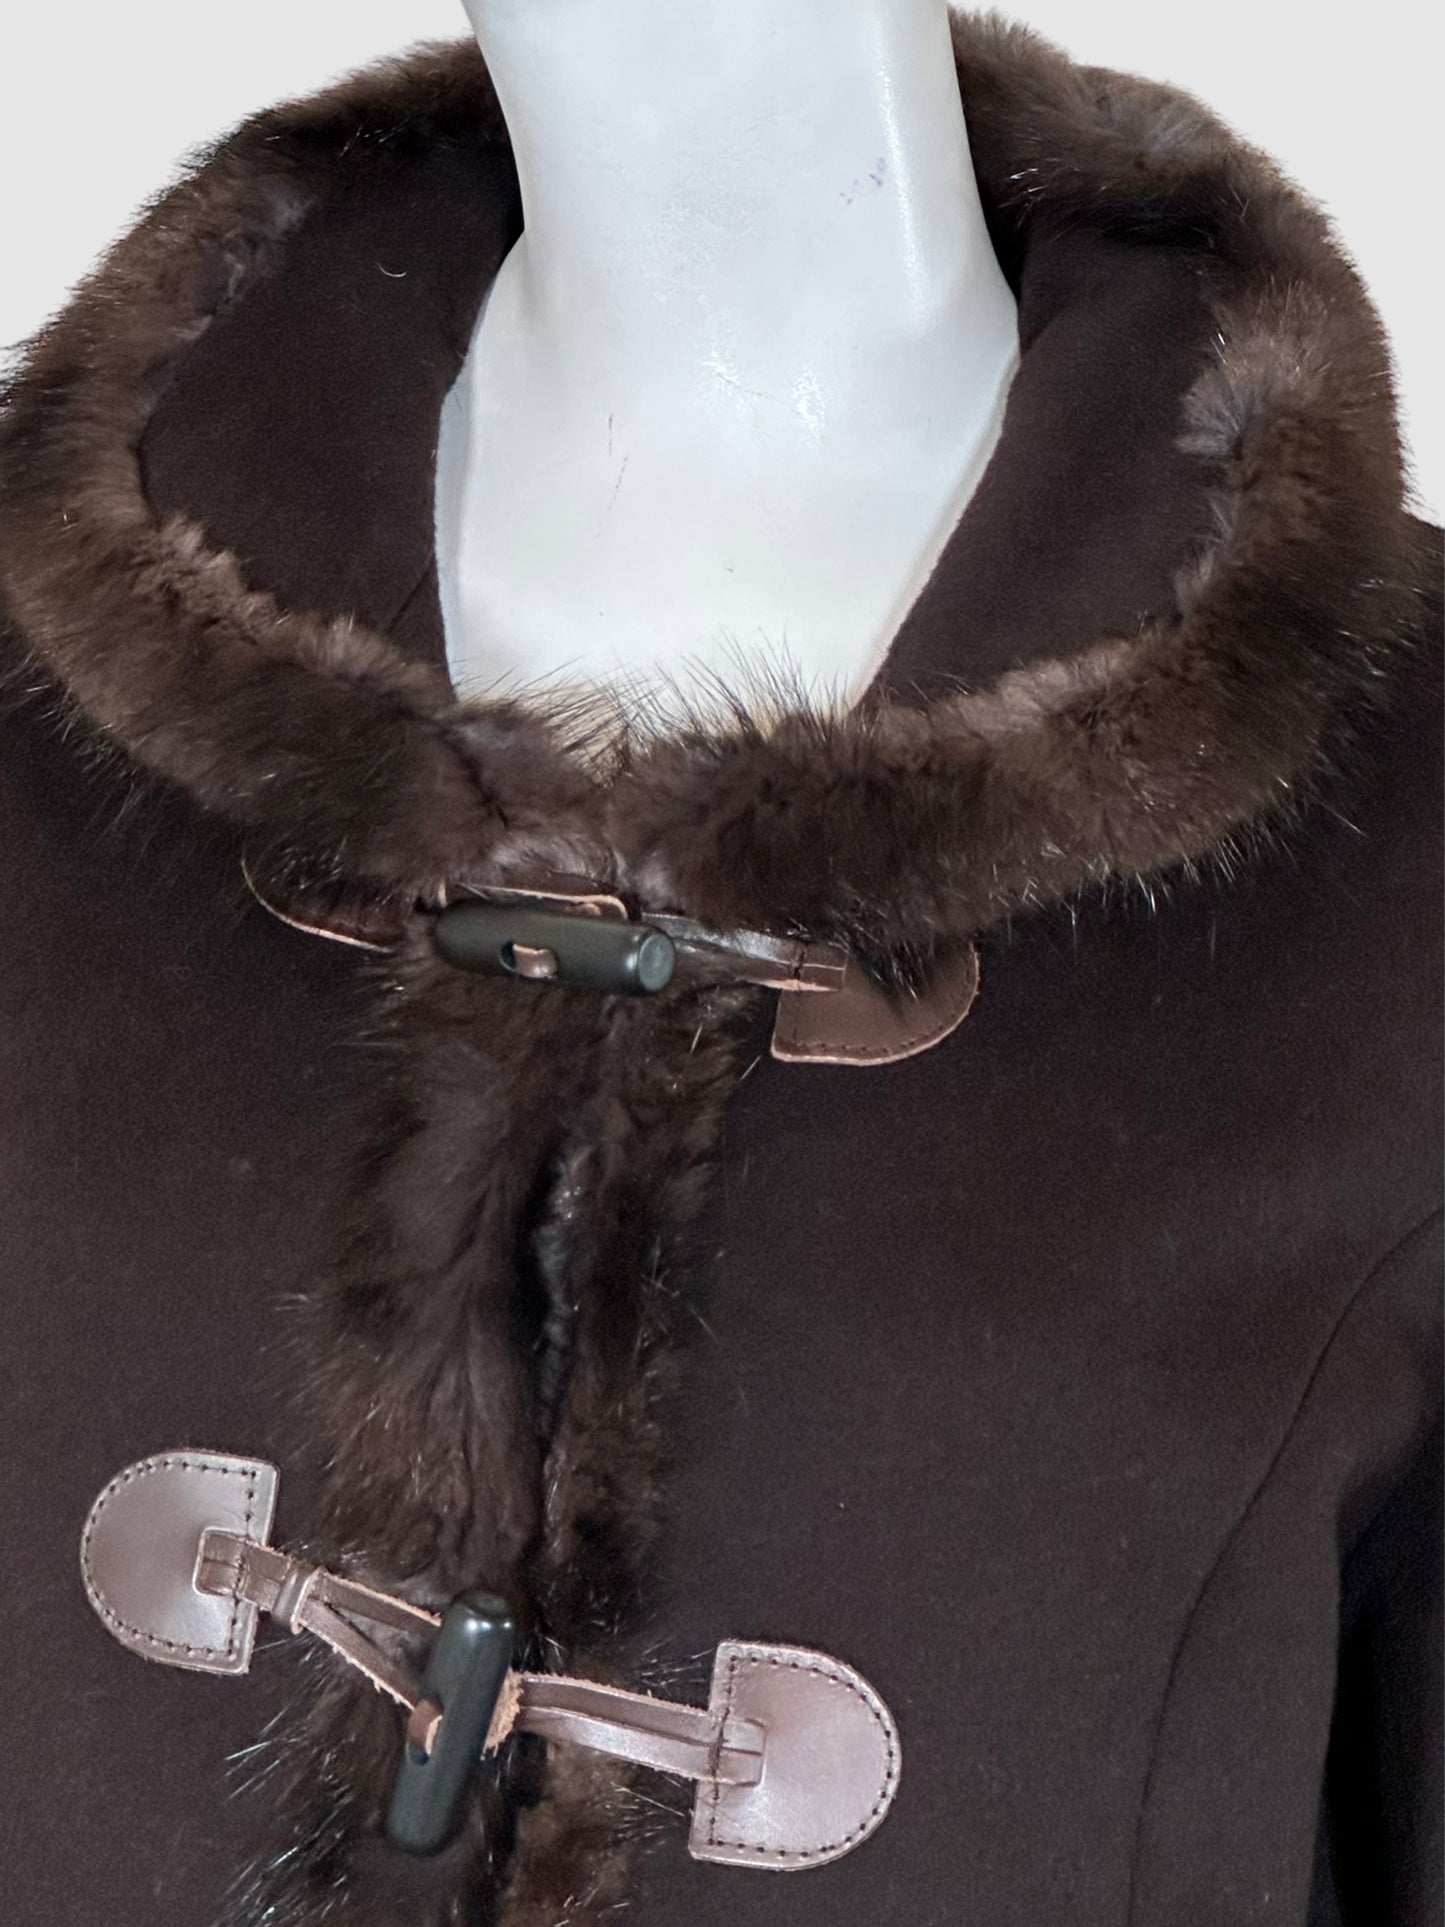 Cinzia Rocca Wool Coat with Fur Trim - Size 8